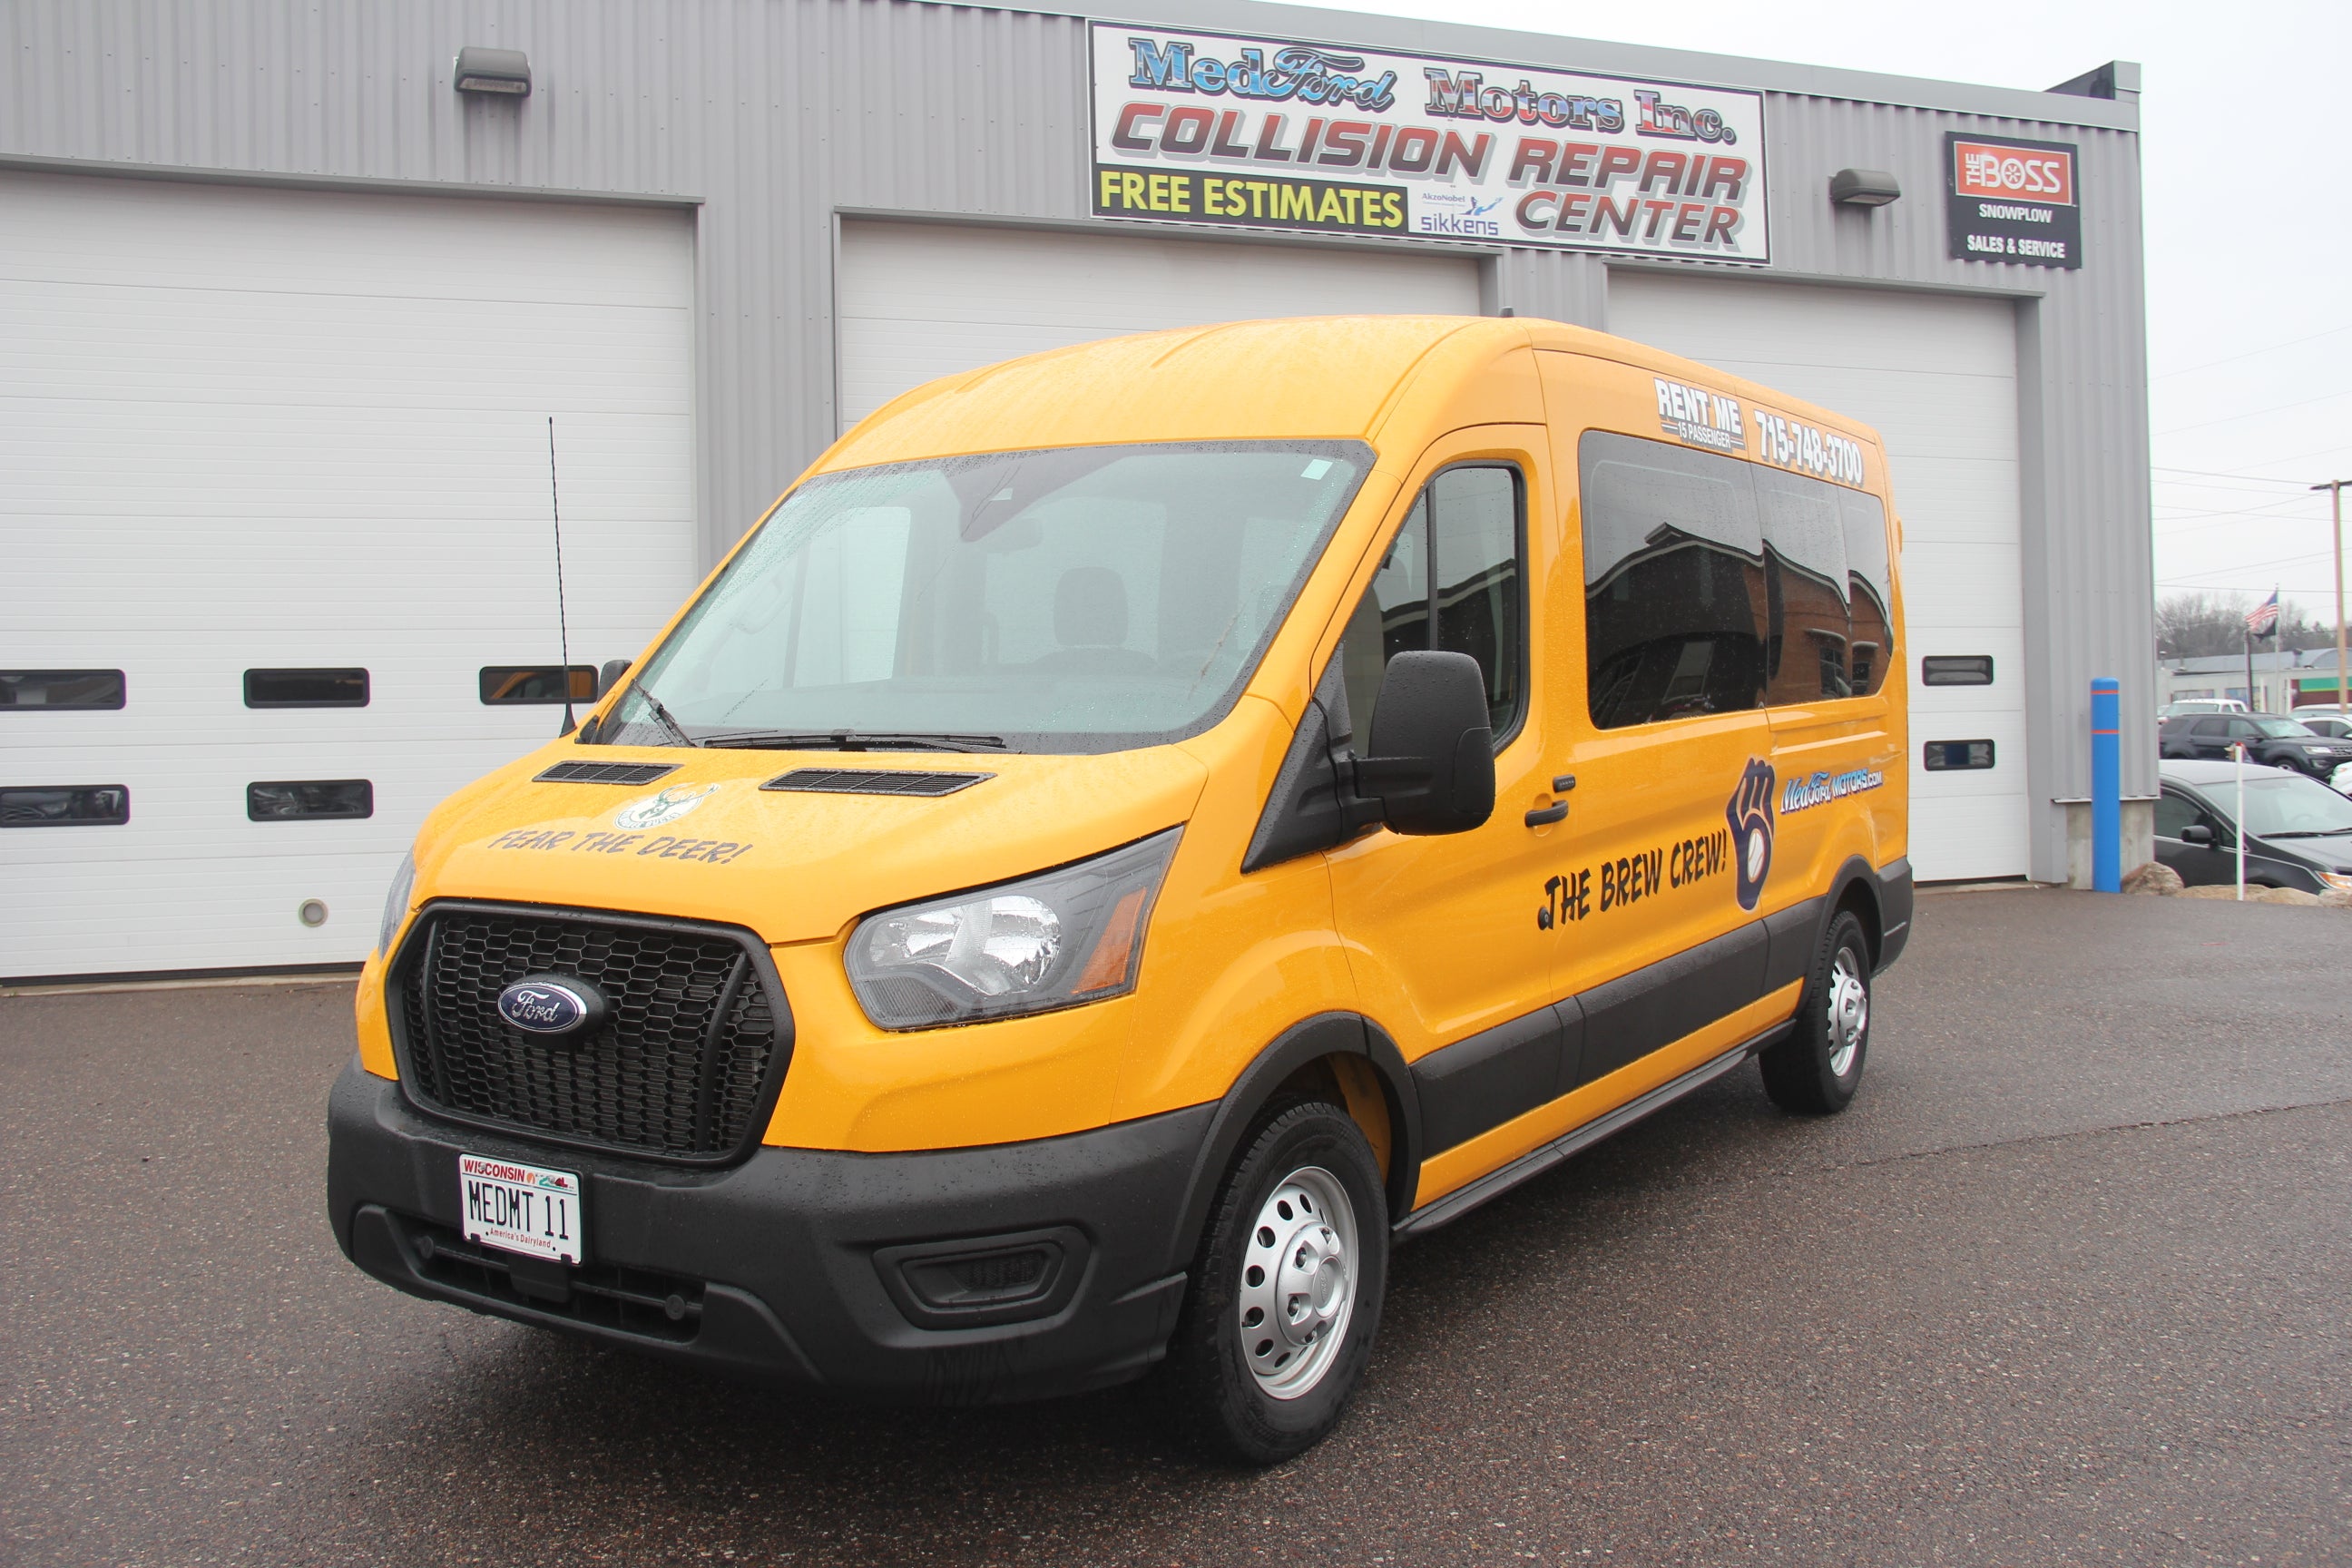 Wisconsin Sports 15 Passenger Van | Medford Motors, Inc. in Medford WI